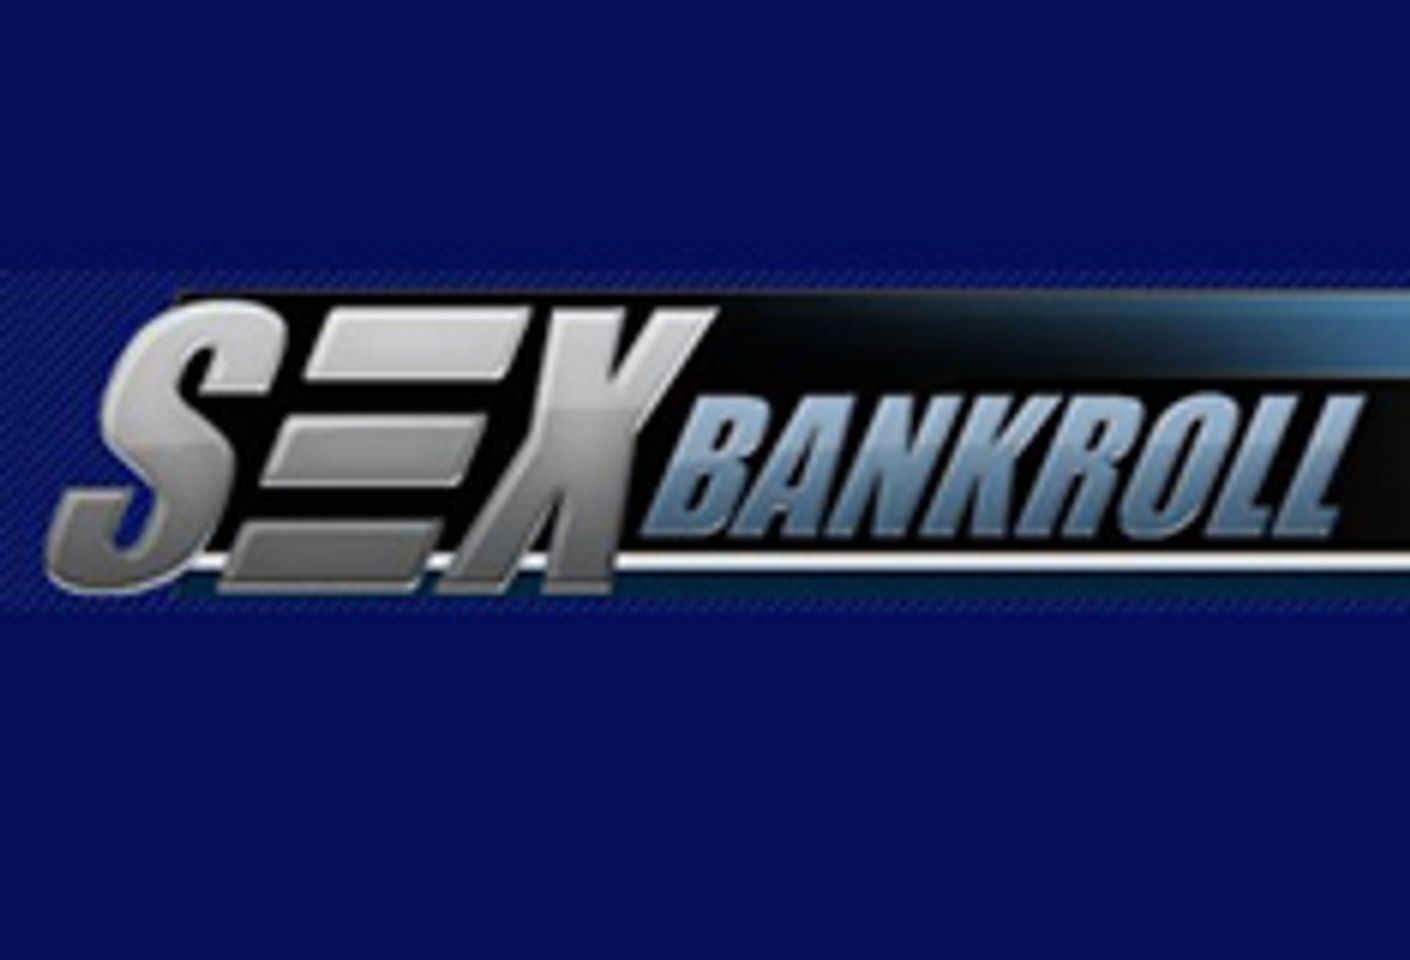 Sexbankroll Announces February Promotions